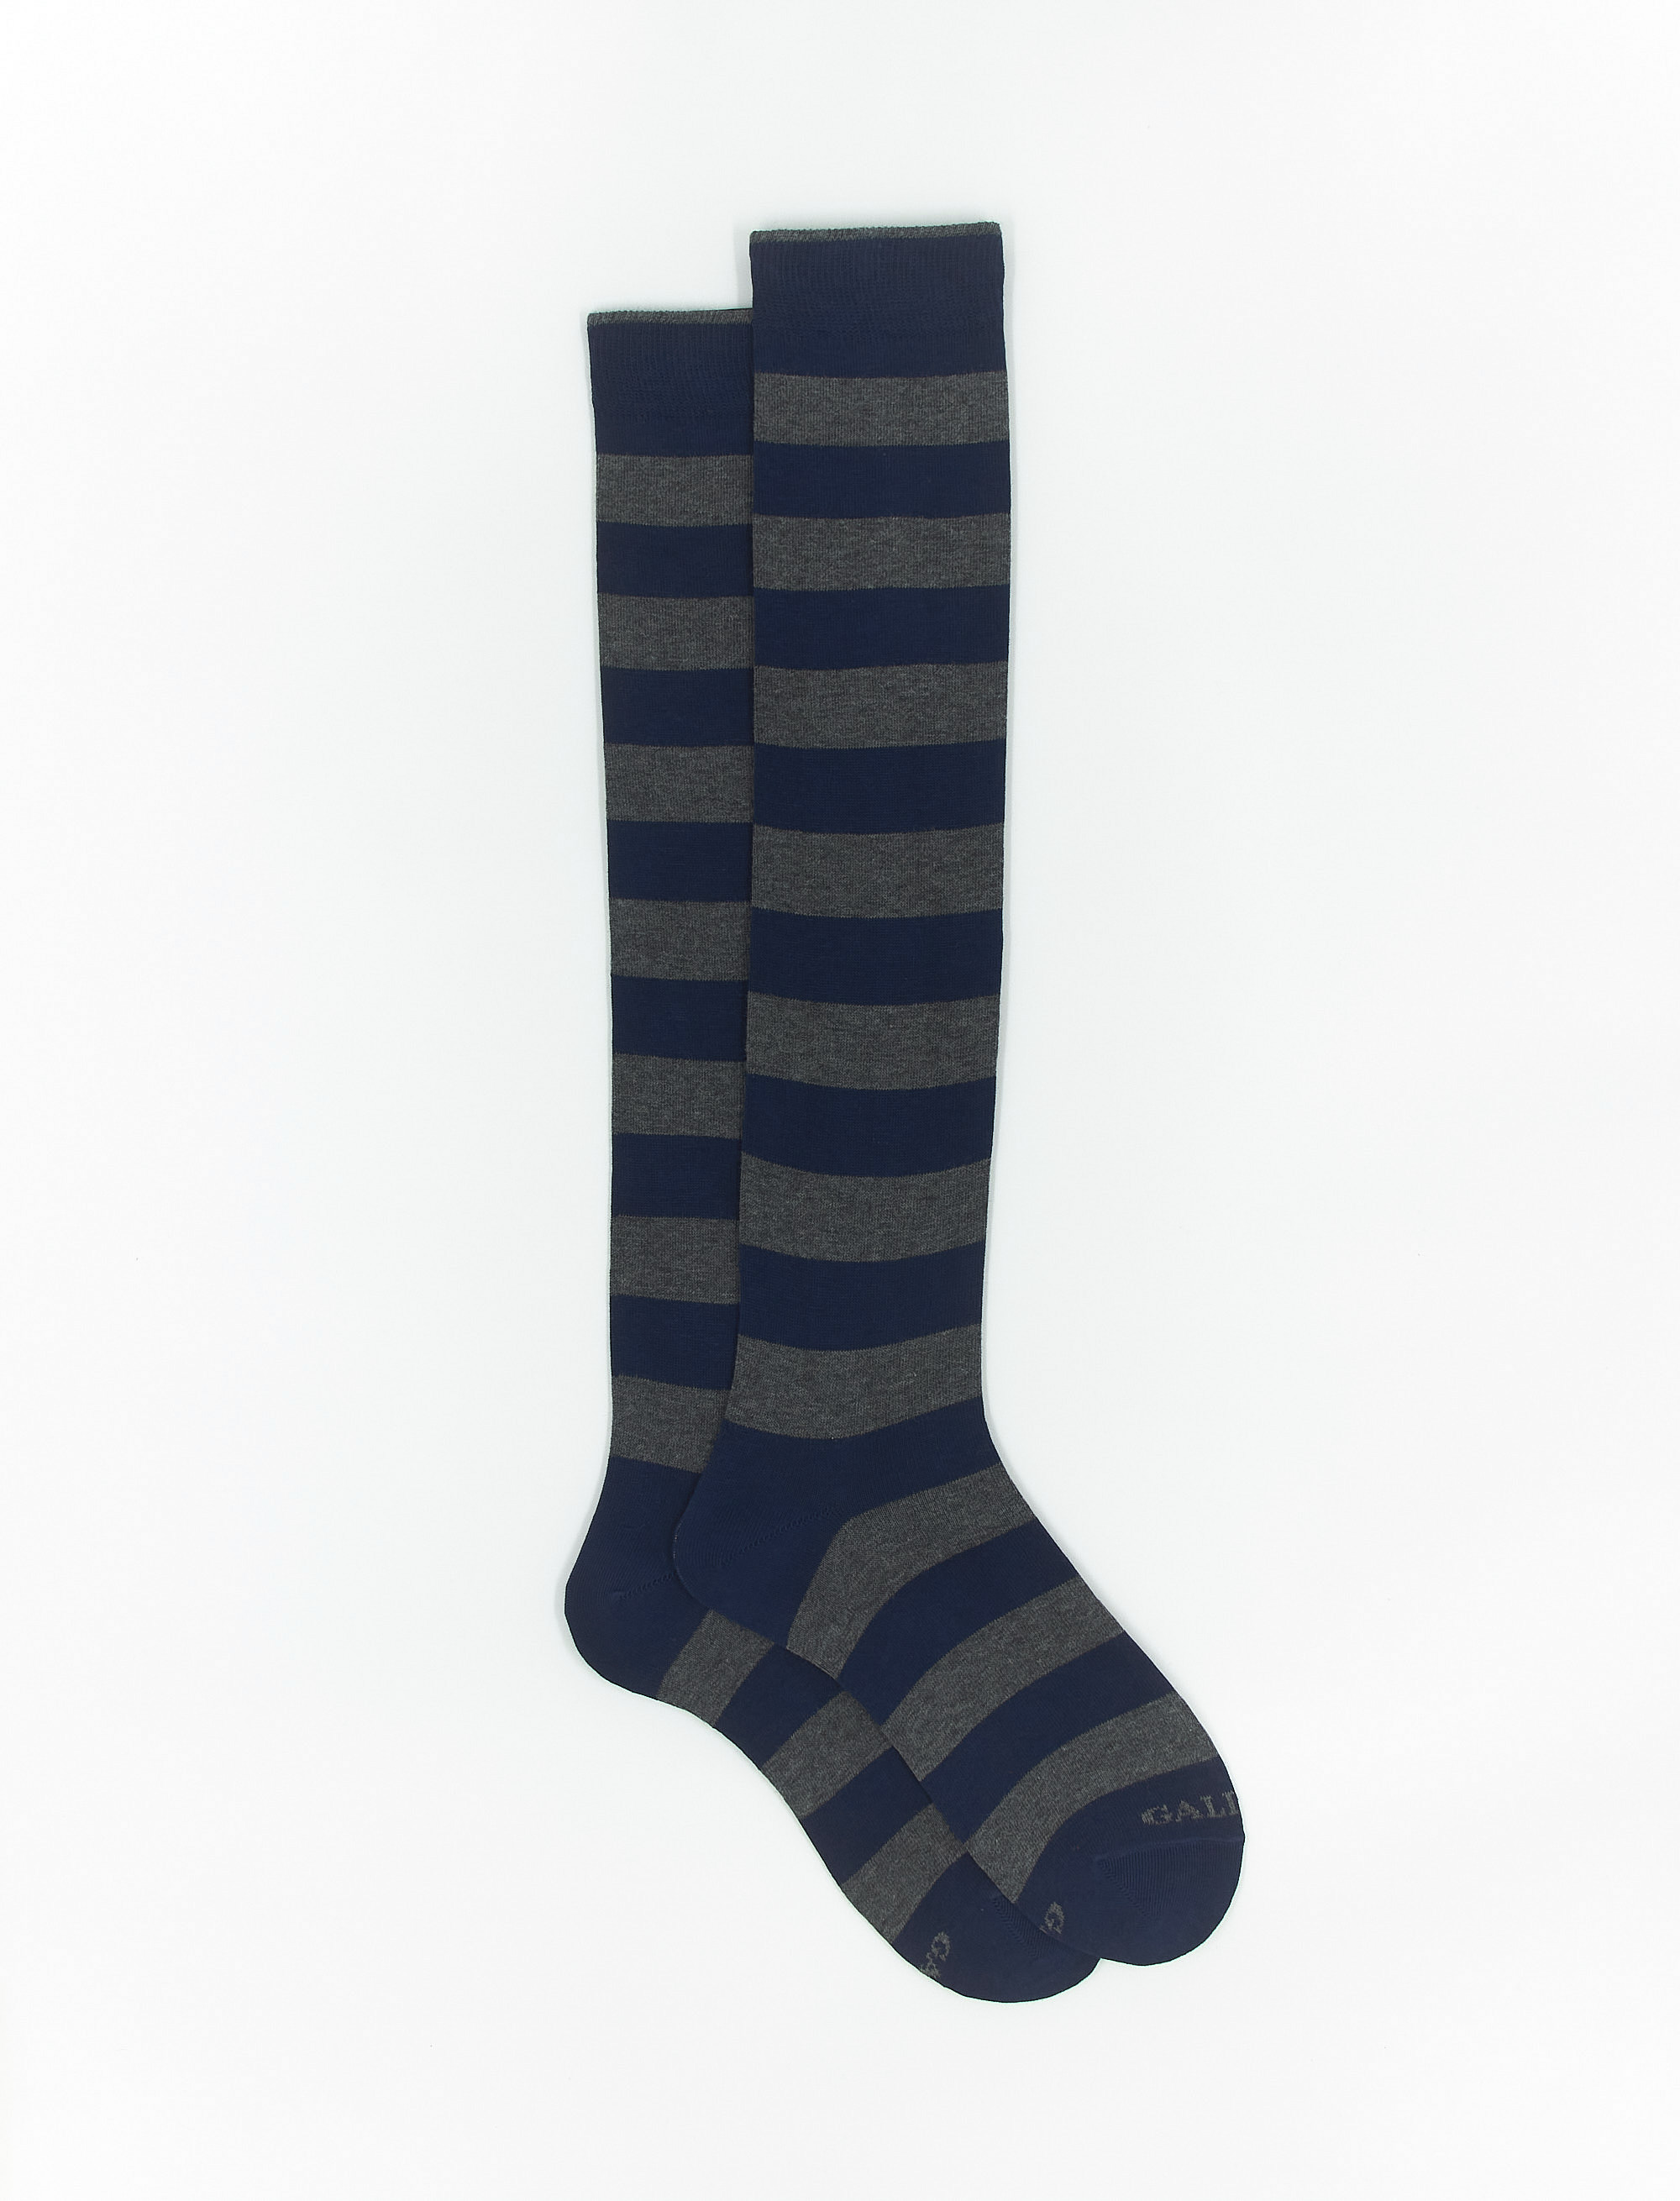 Calze lunghe donna cotone blu royal righe bicolore - Bicolor | Gallo 1927 - Official Online Shop